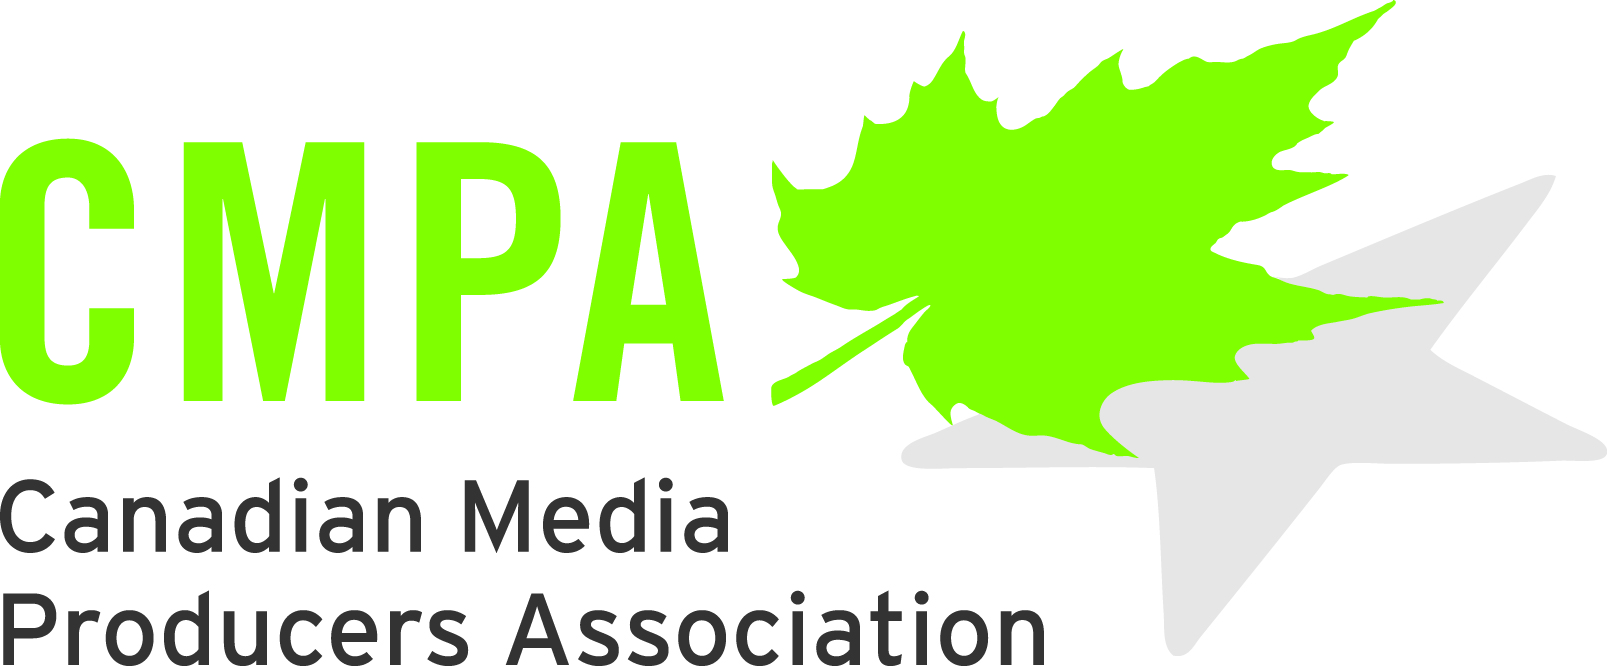 Canadian Media Producers Association logo